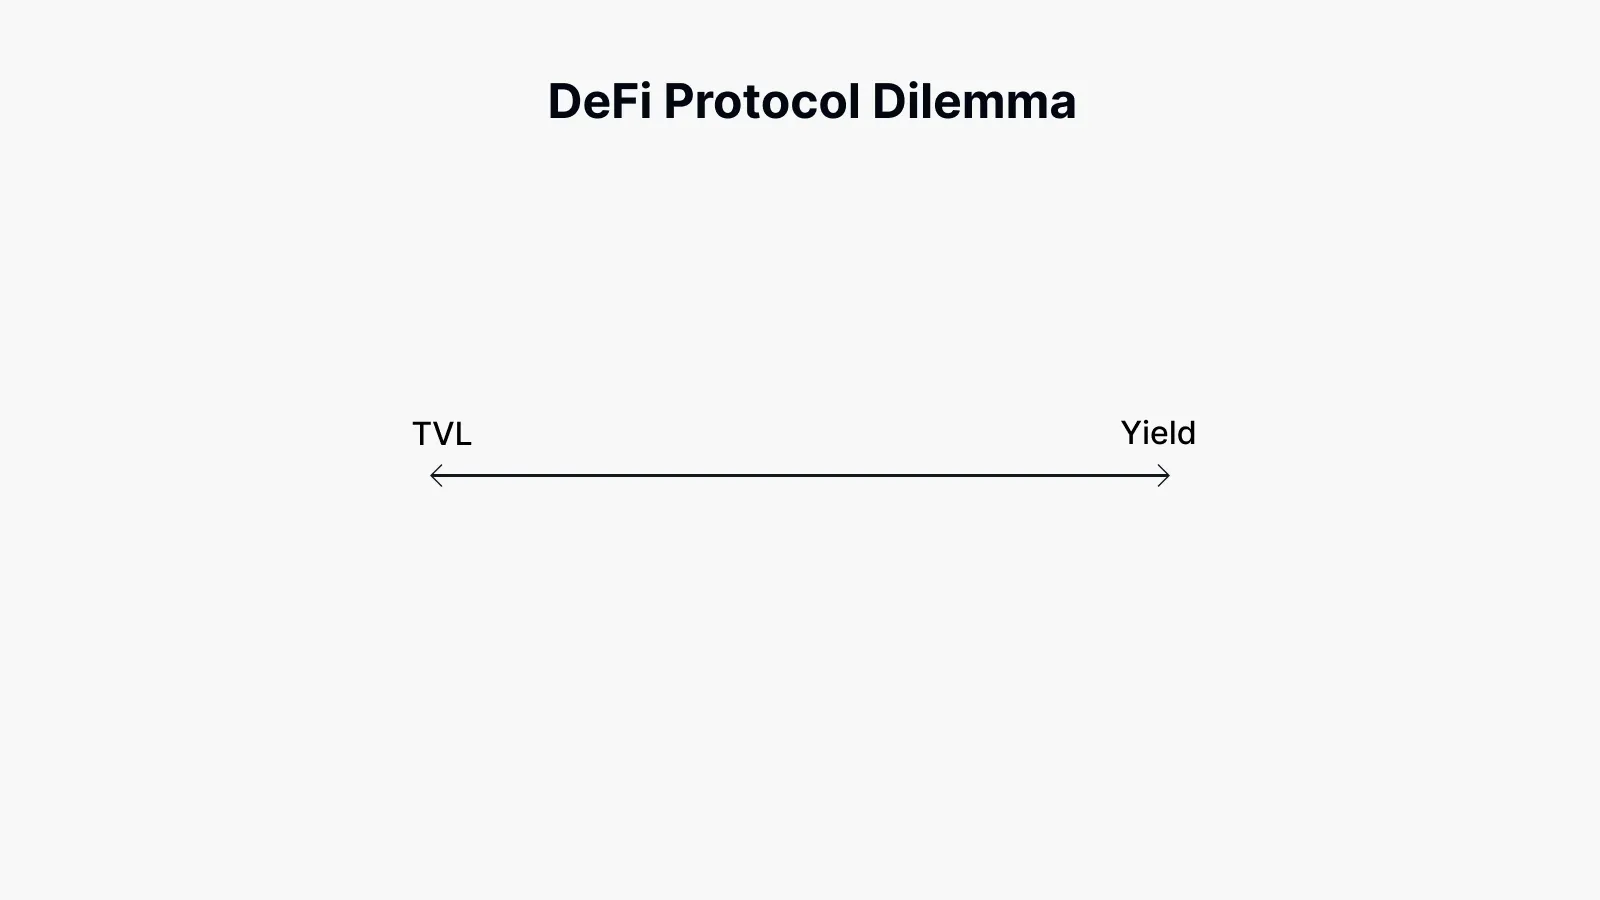 DeFi Protocol Dilemma